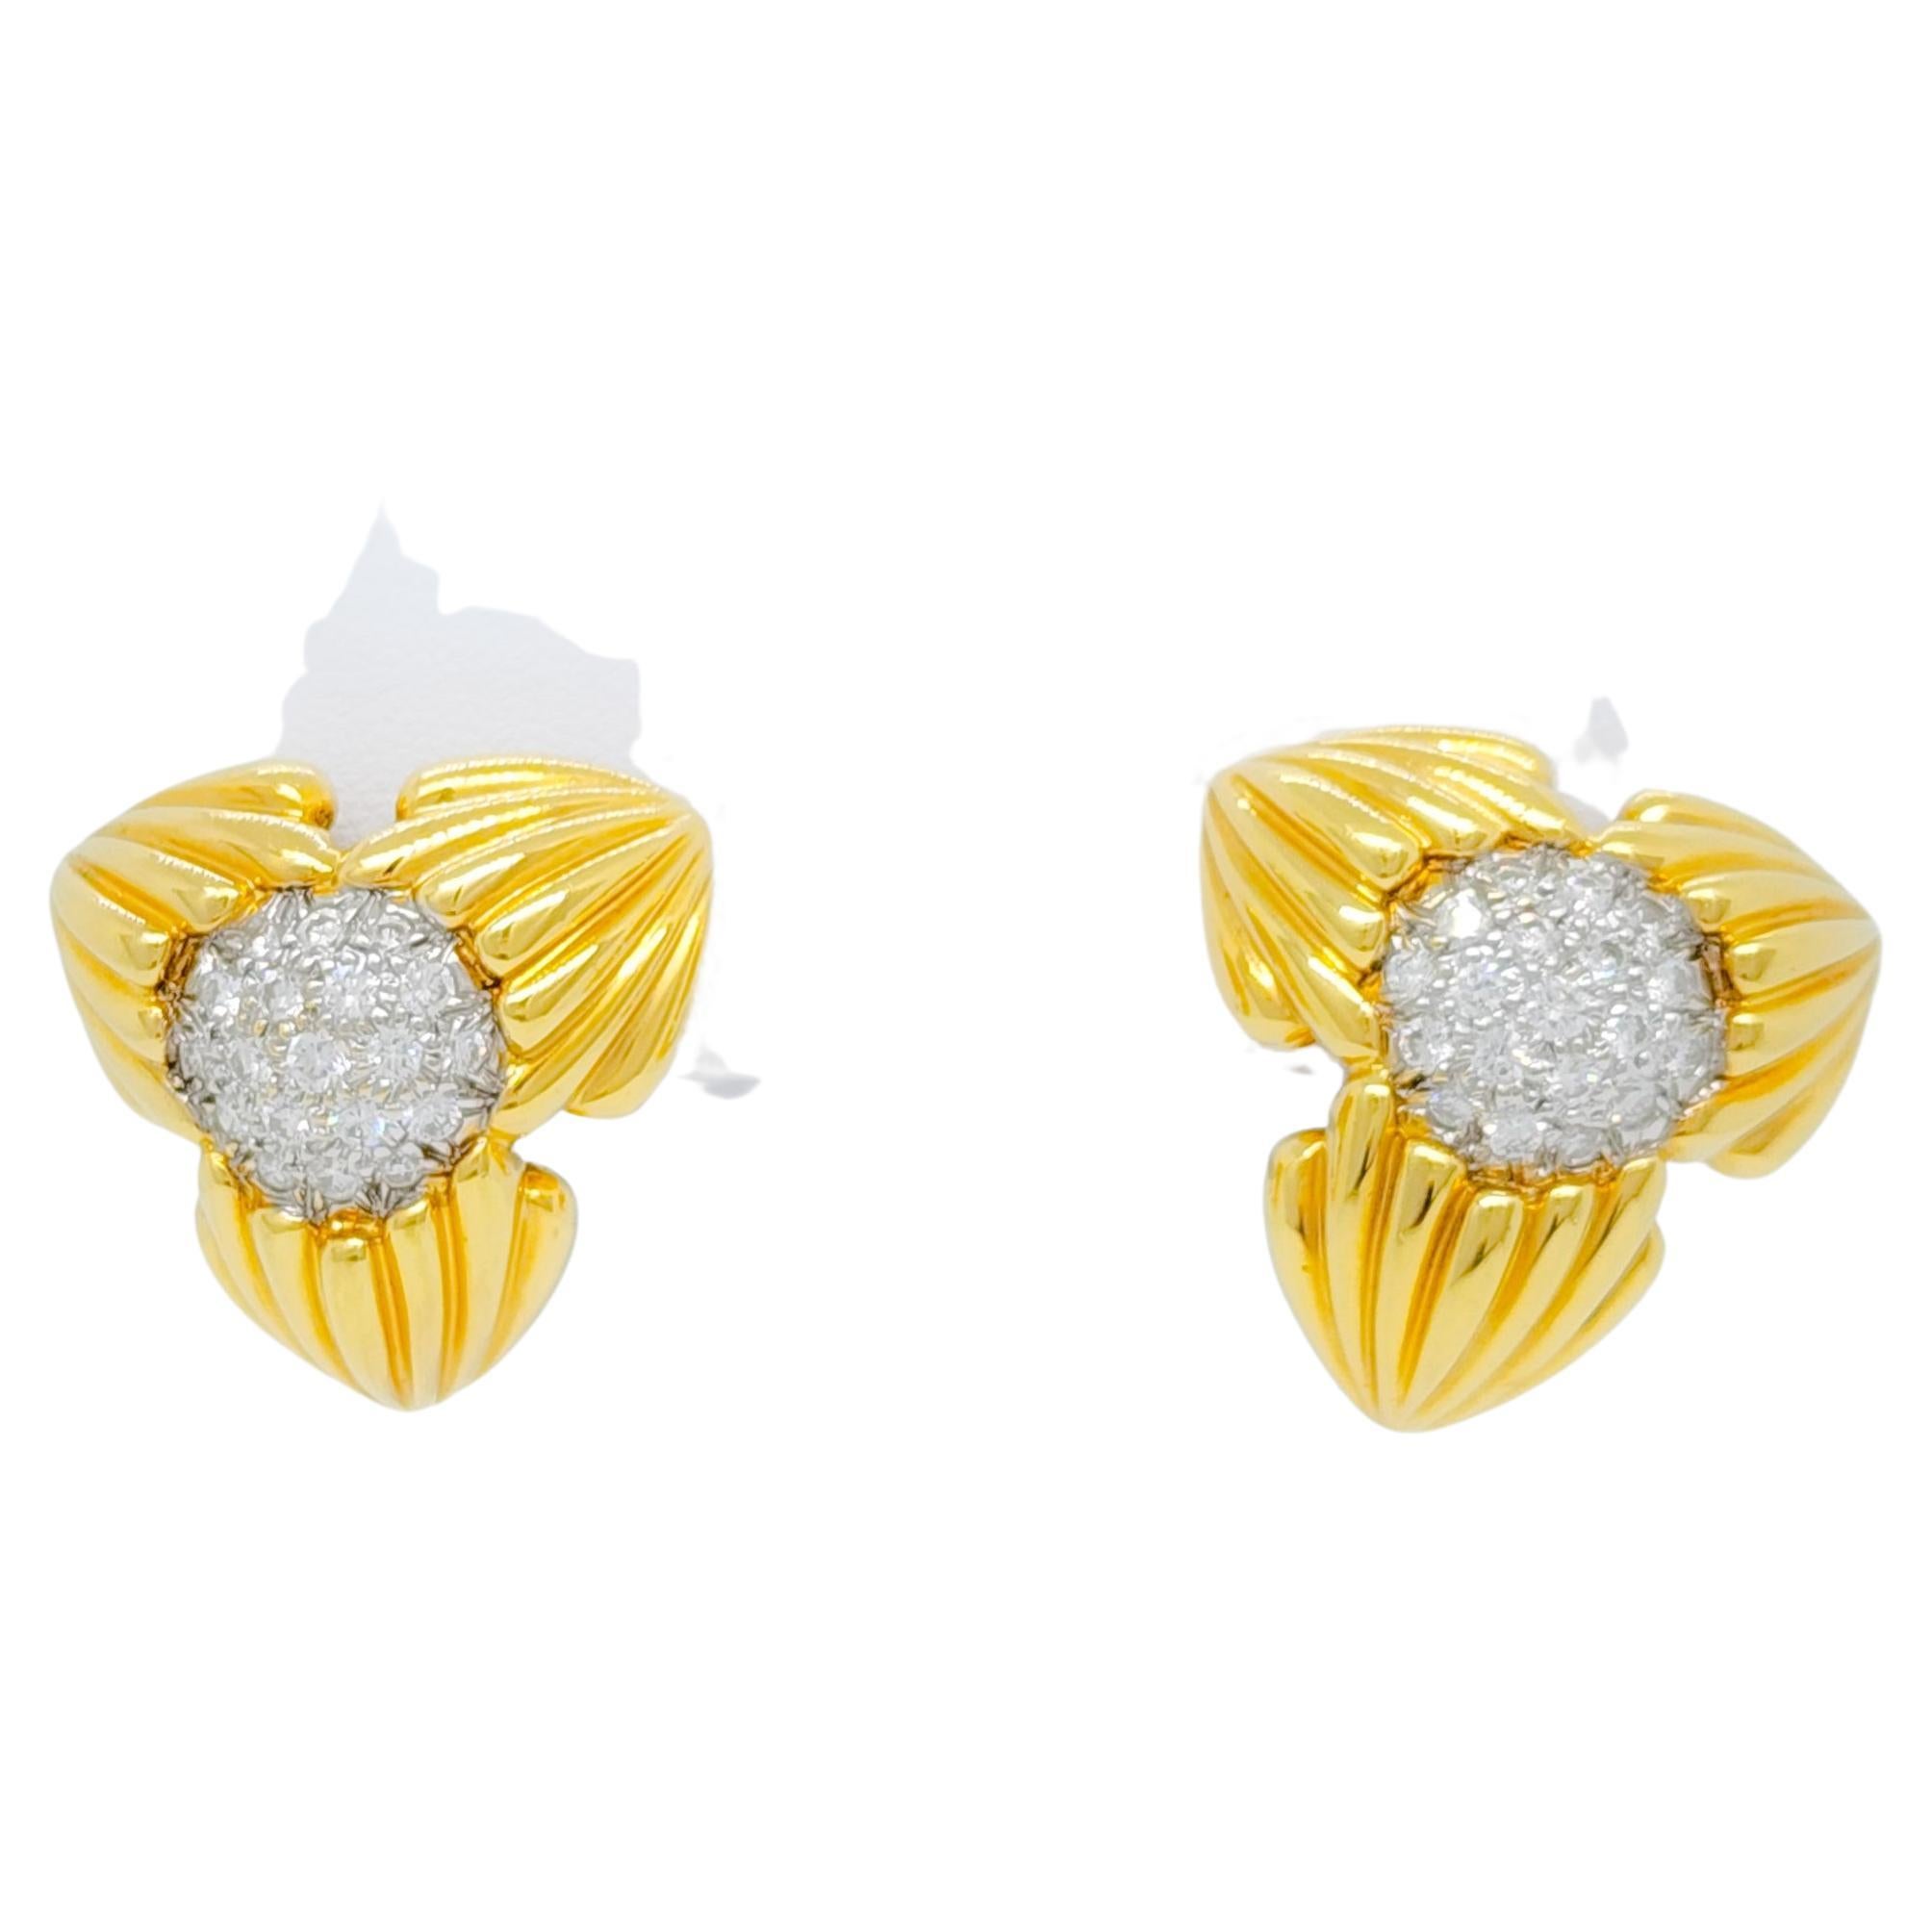 Valentin Magro White Diamond Earrings in 18k Two Tone Gold